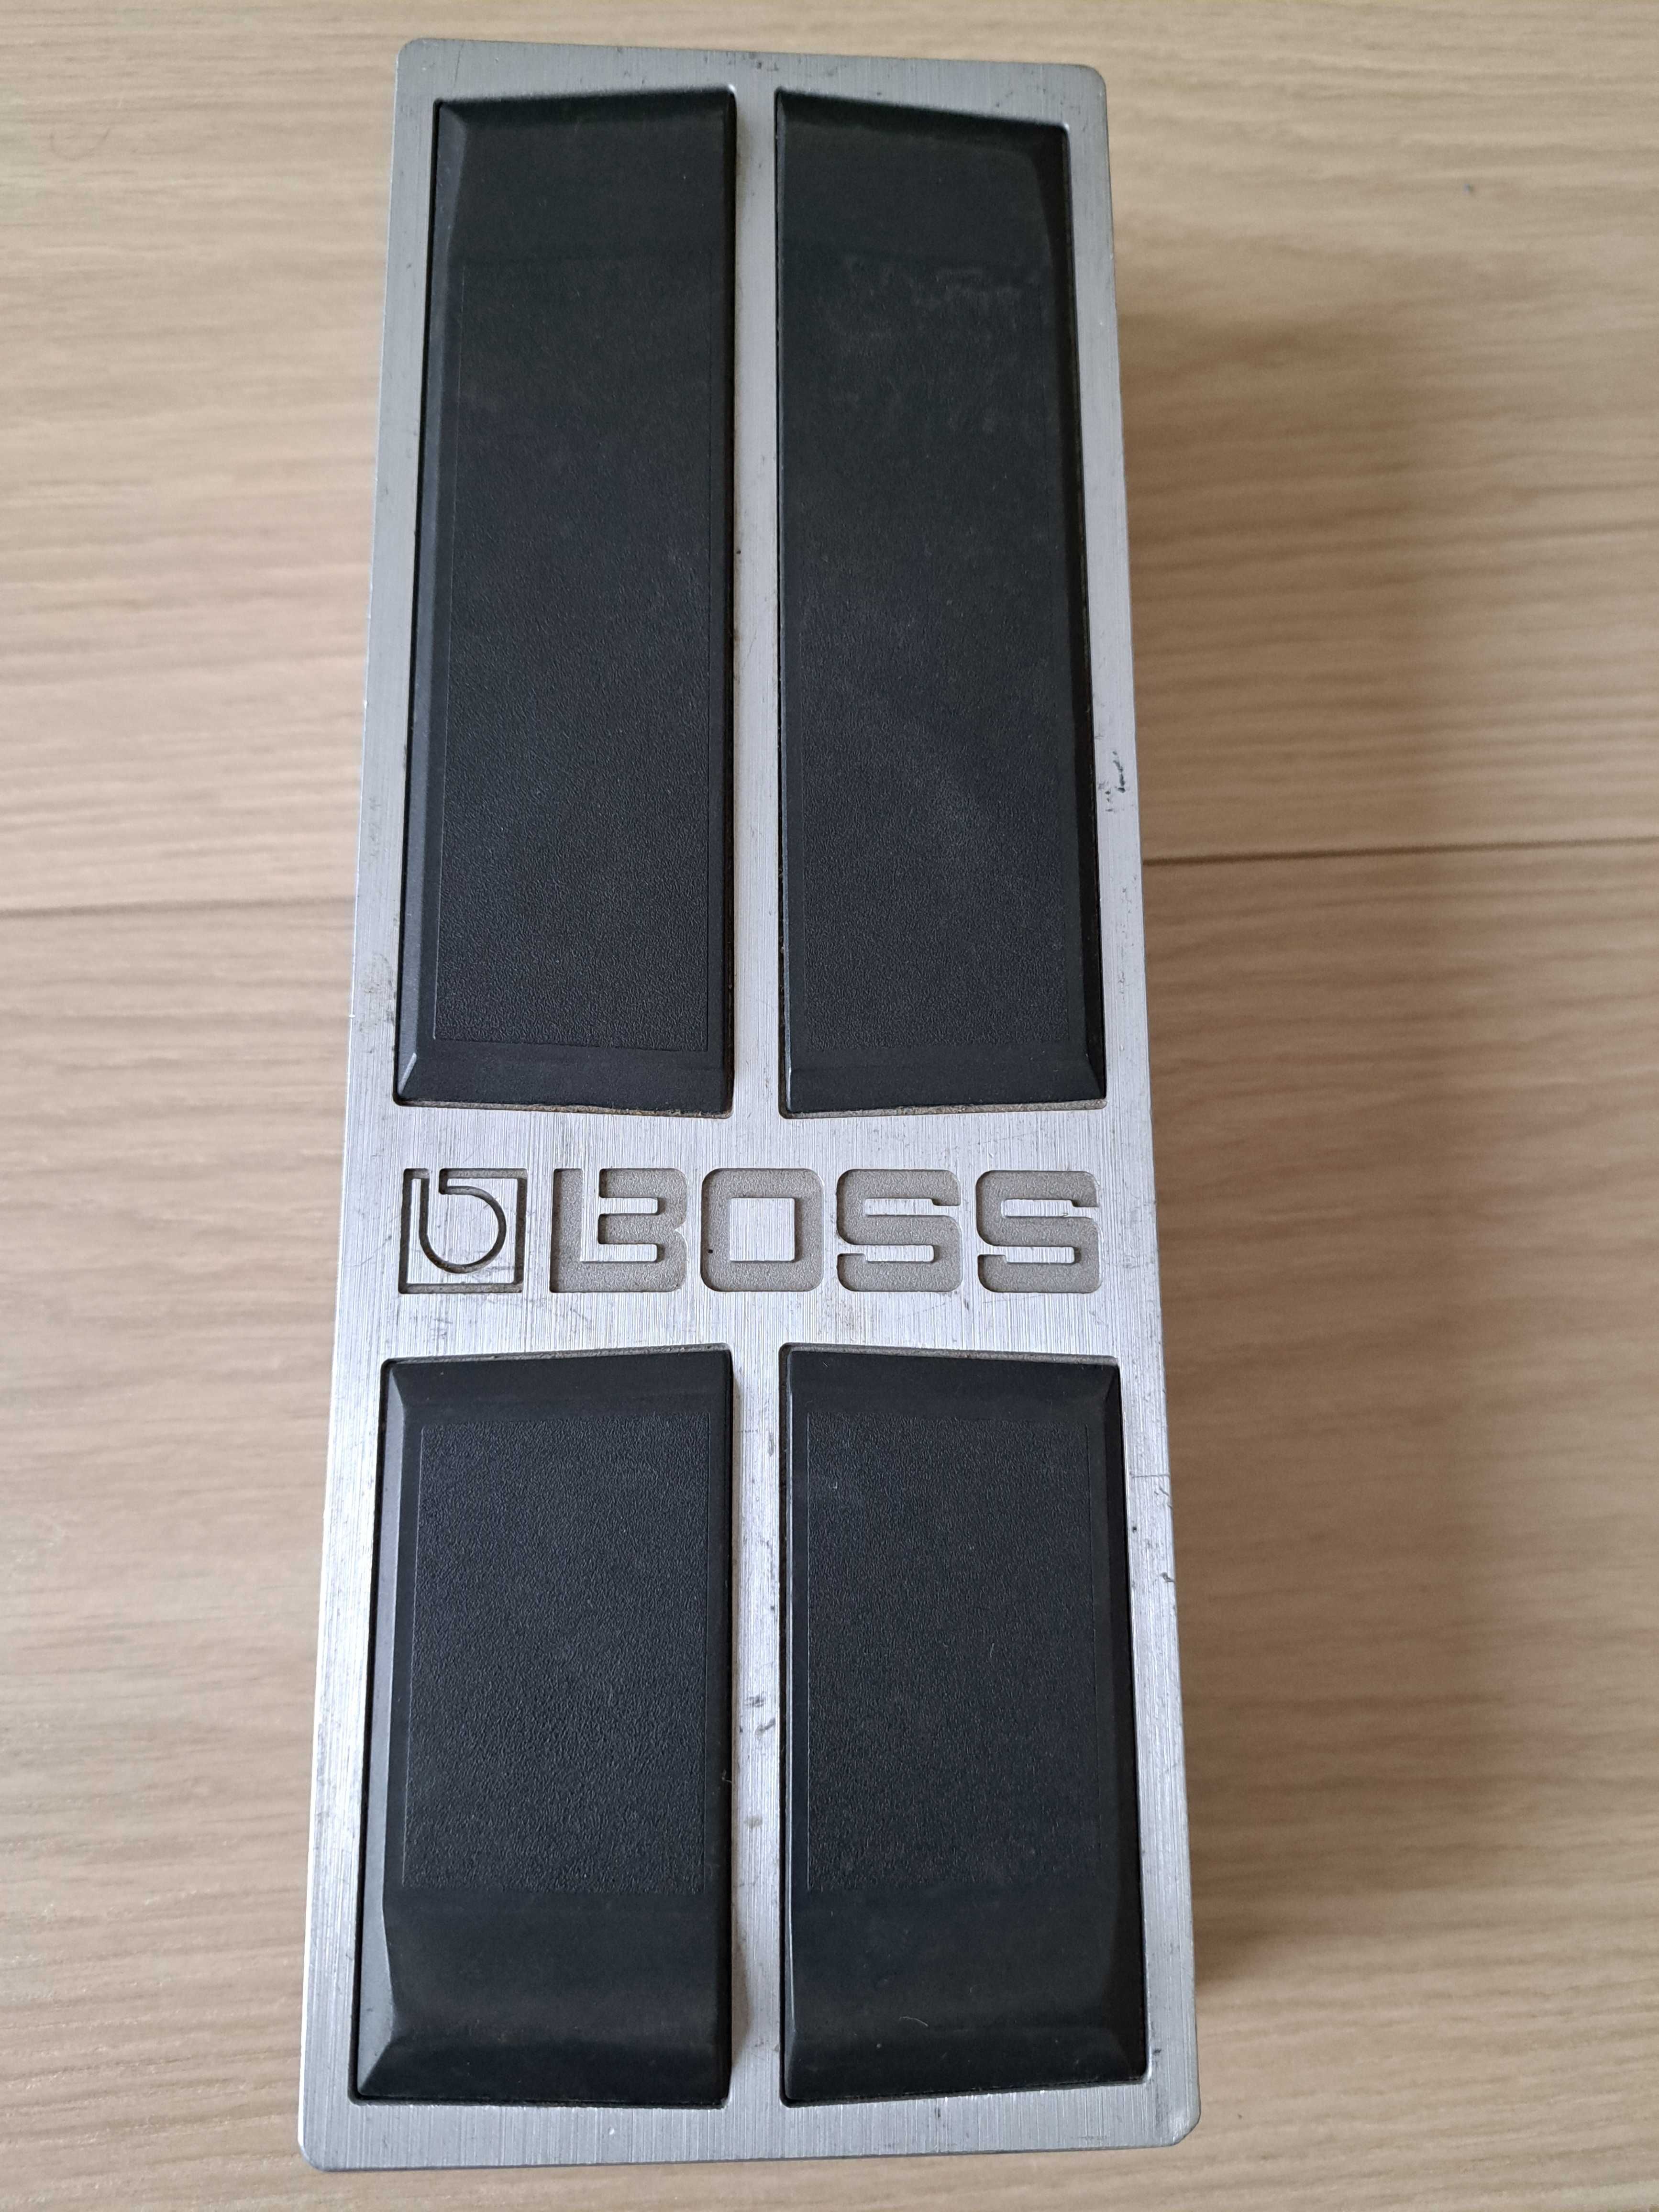 Boss FV 500 L volume pedal / pedał głośności / ekspresji